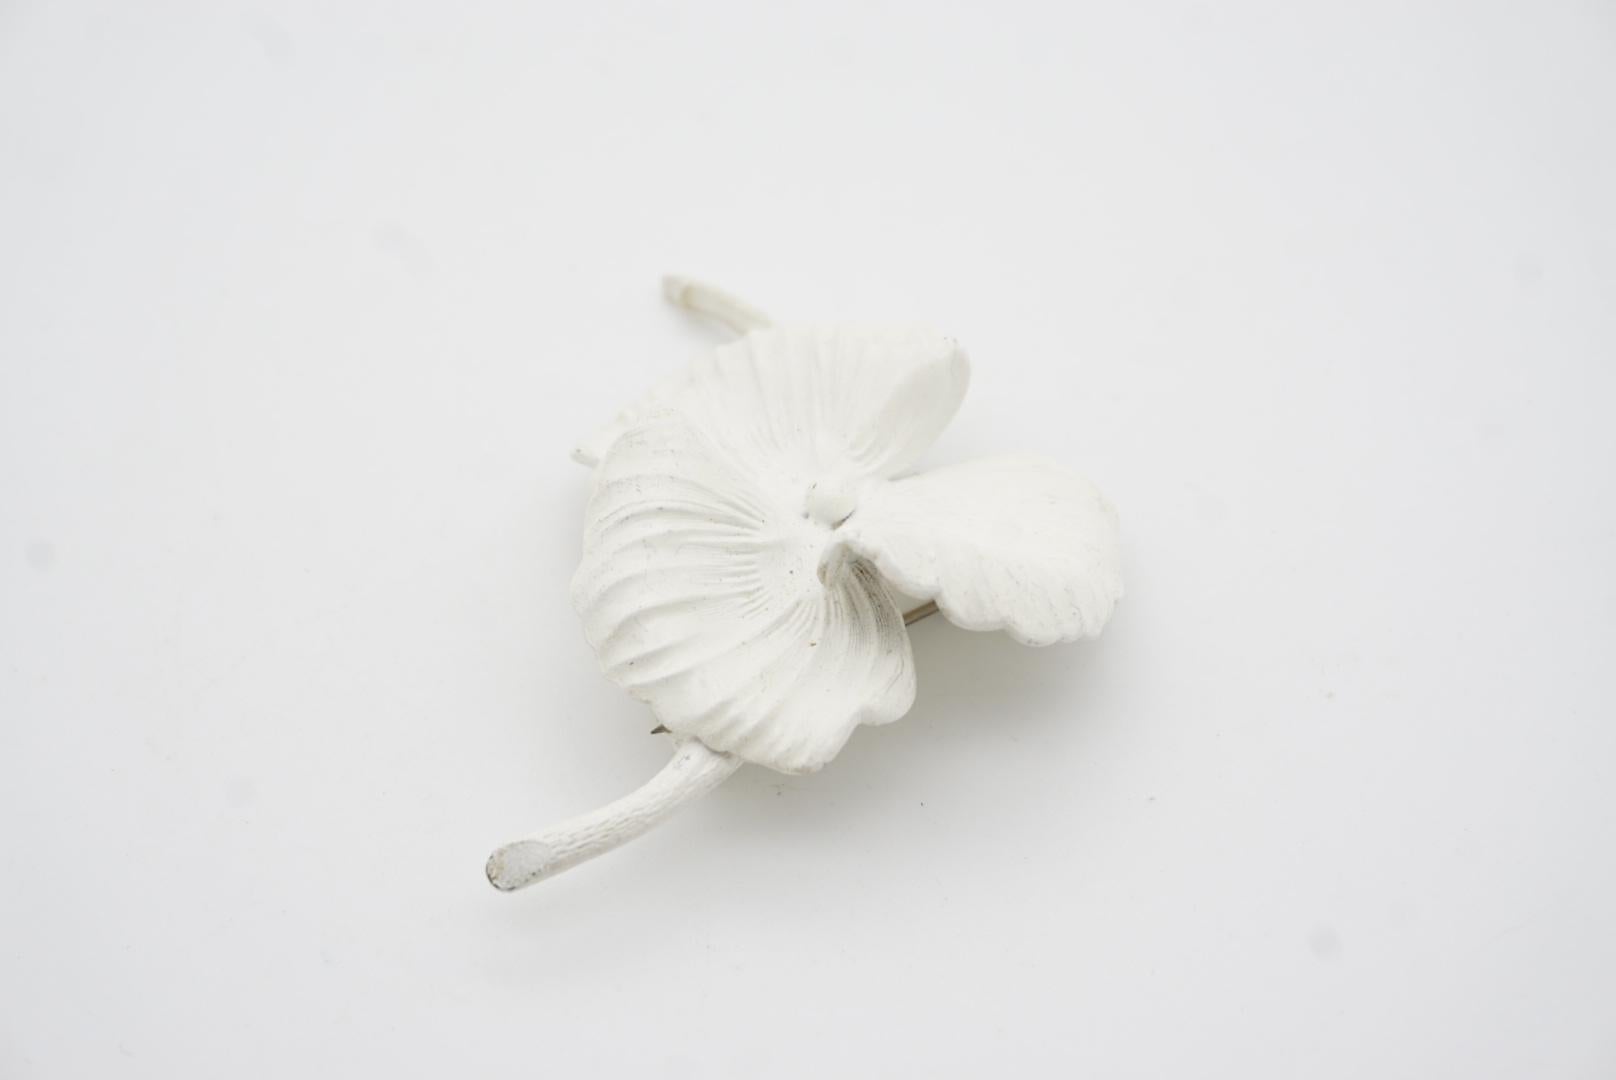 Christian Dior GROSSE 1961 Vintage Swirl White Trio Clover Flower Leaf Brooch For Sale 2